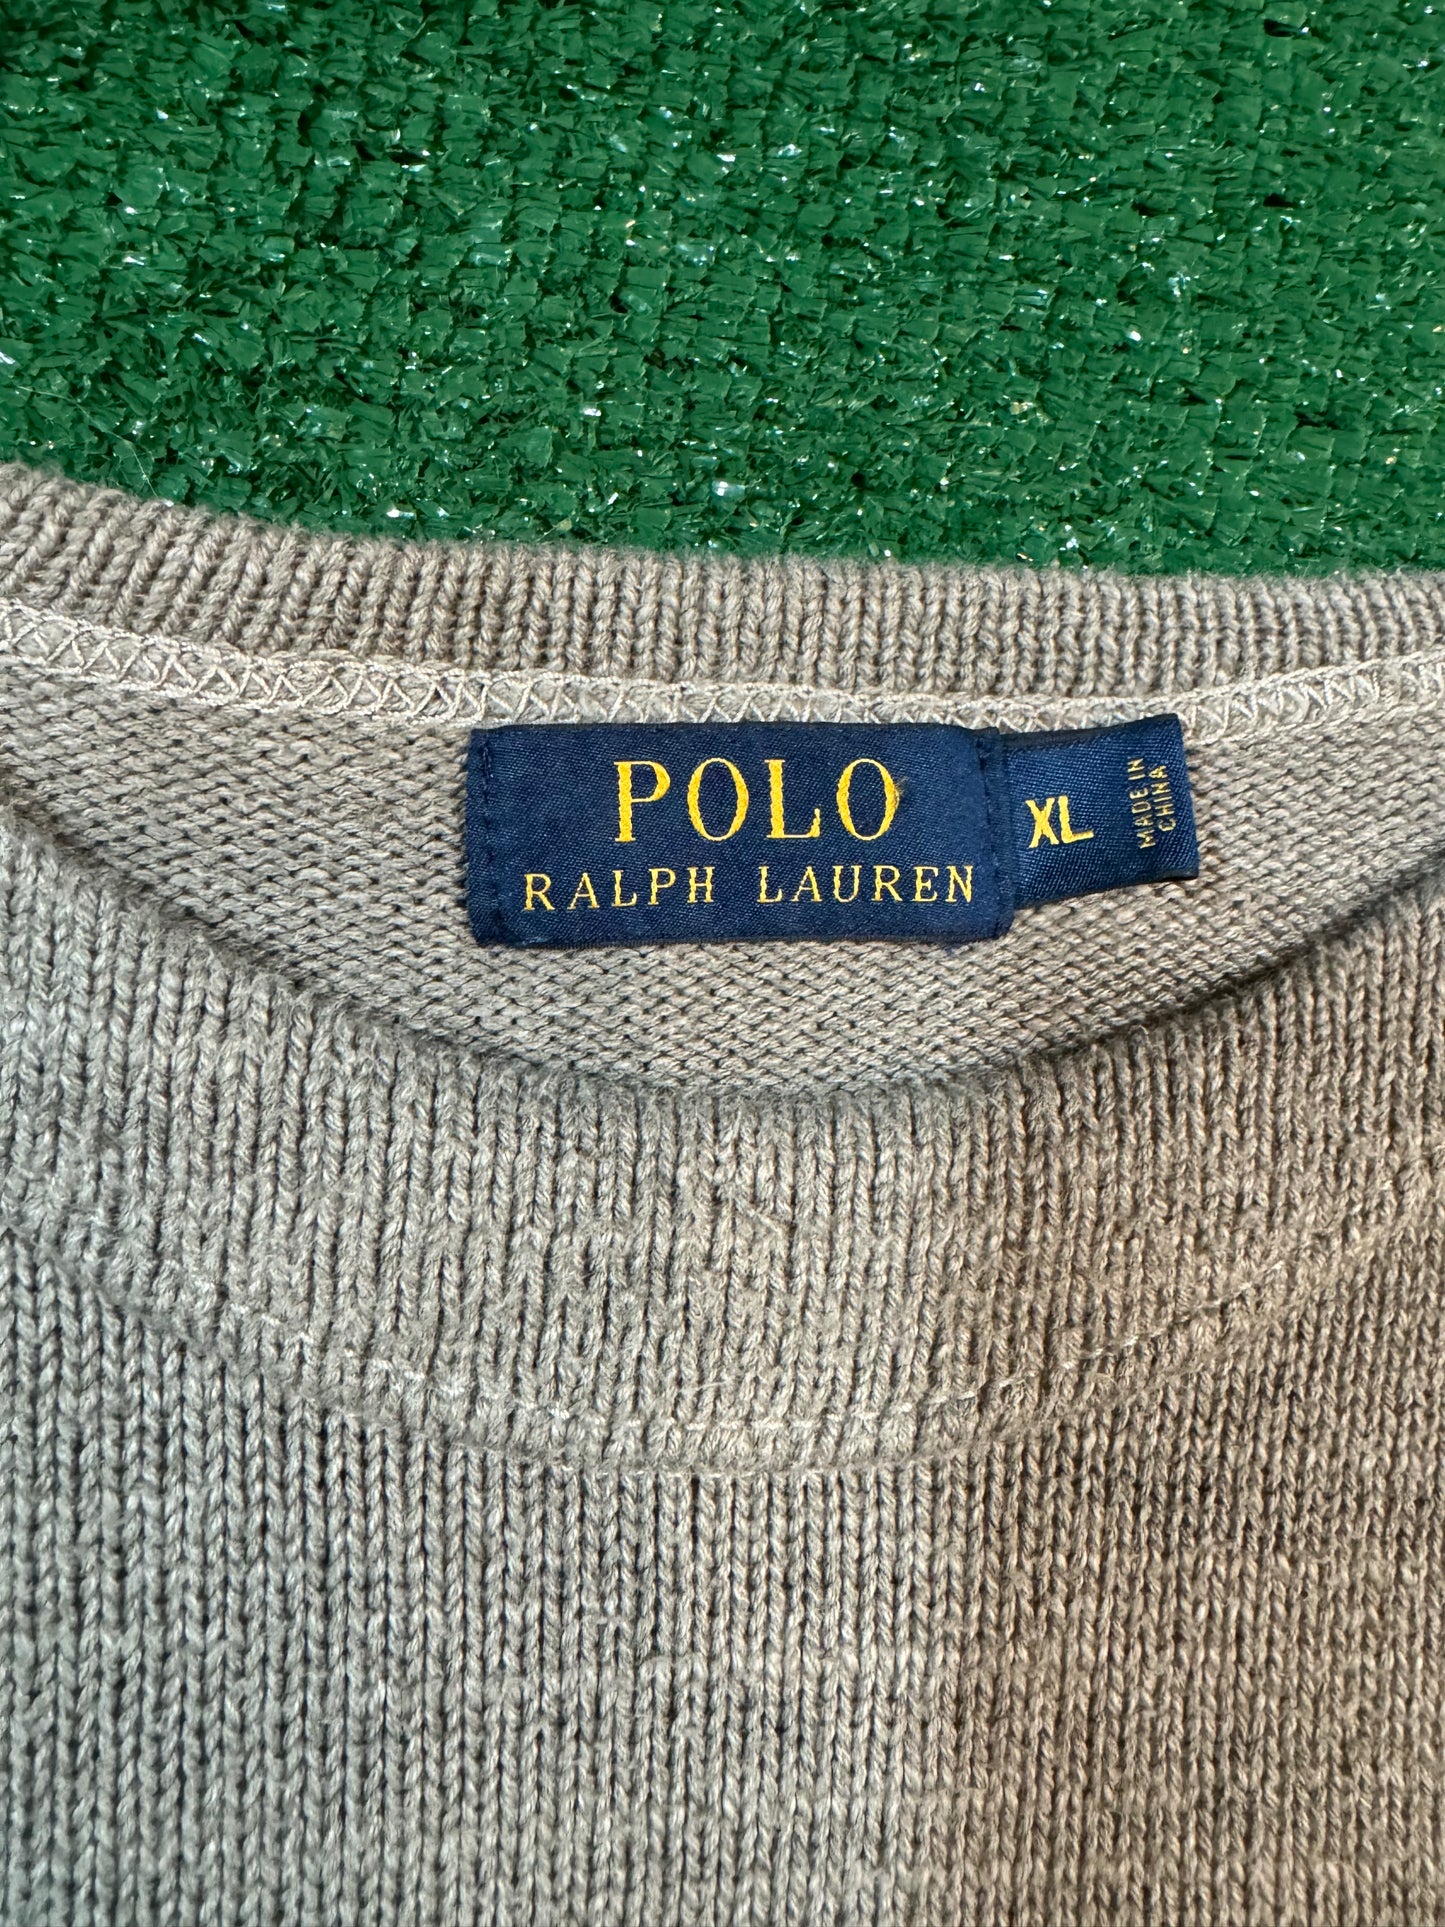 Polo Ralph Lauren, Big P wool varsity crew sweater